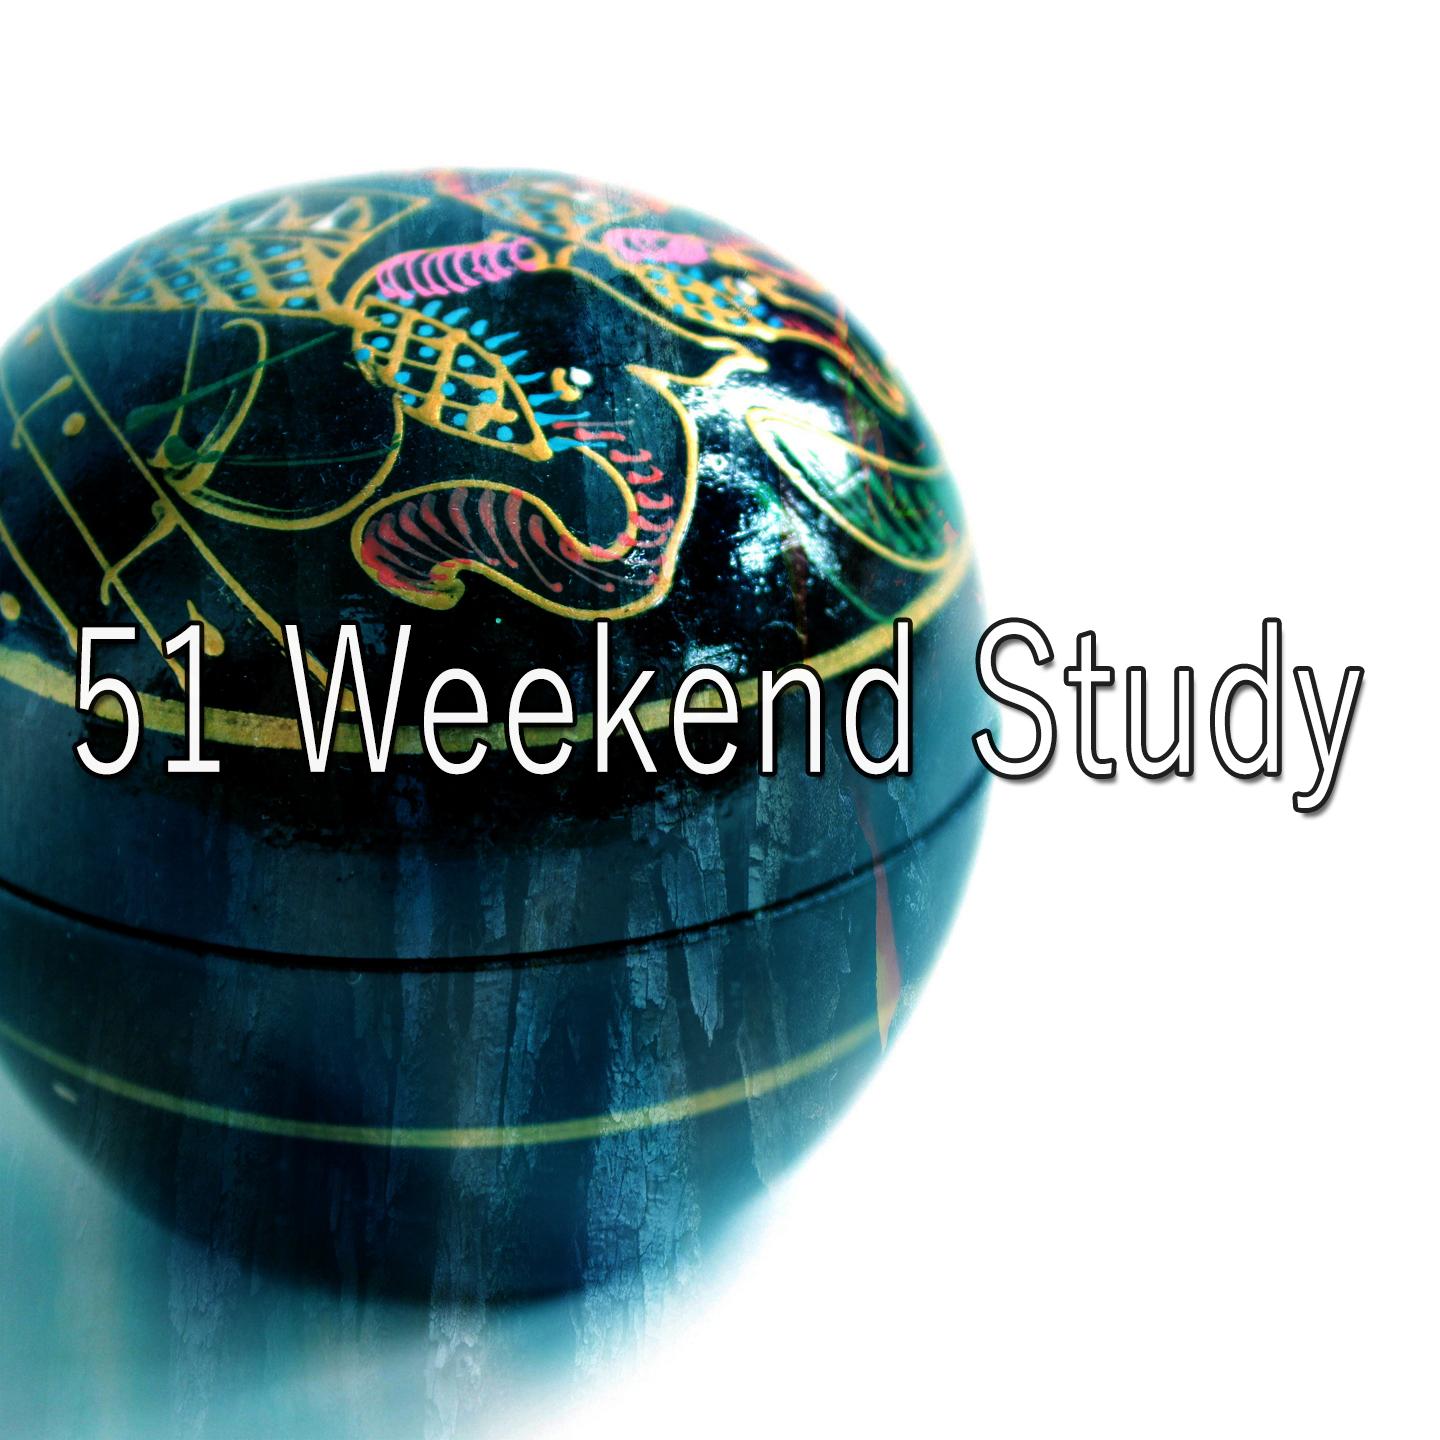 51 Weekend Study